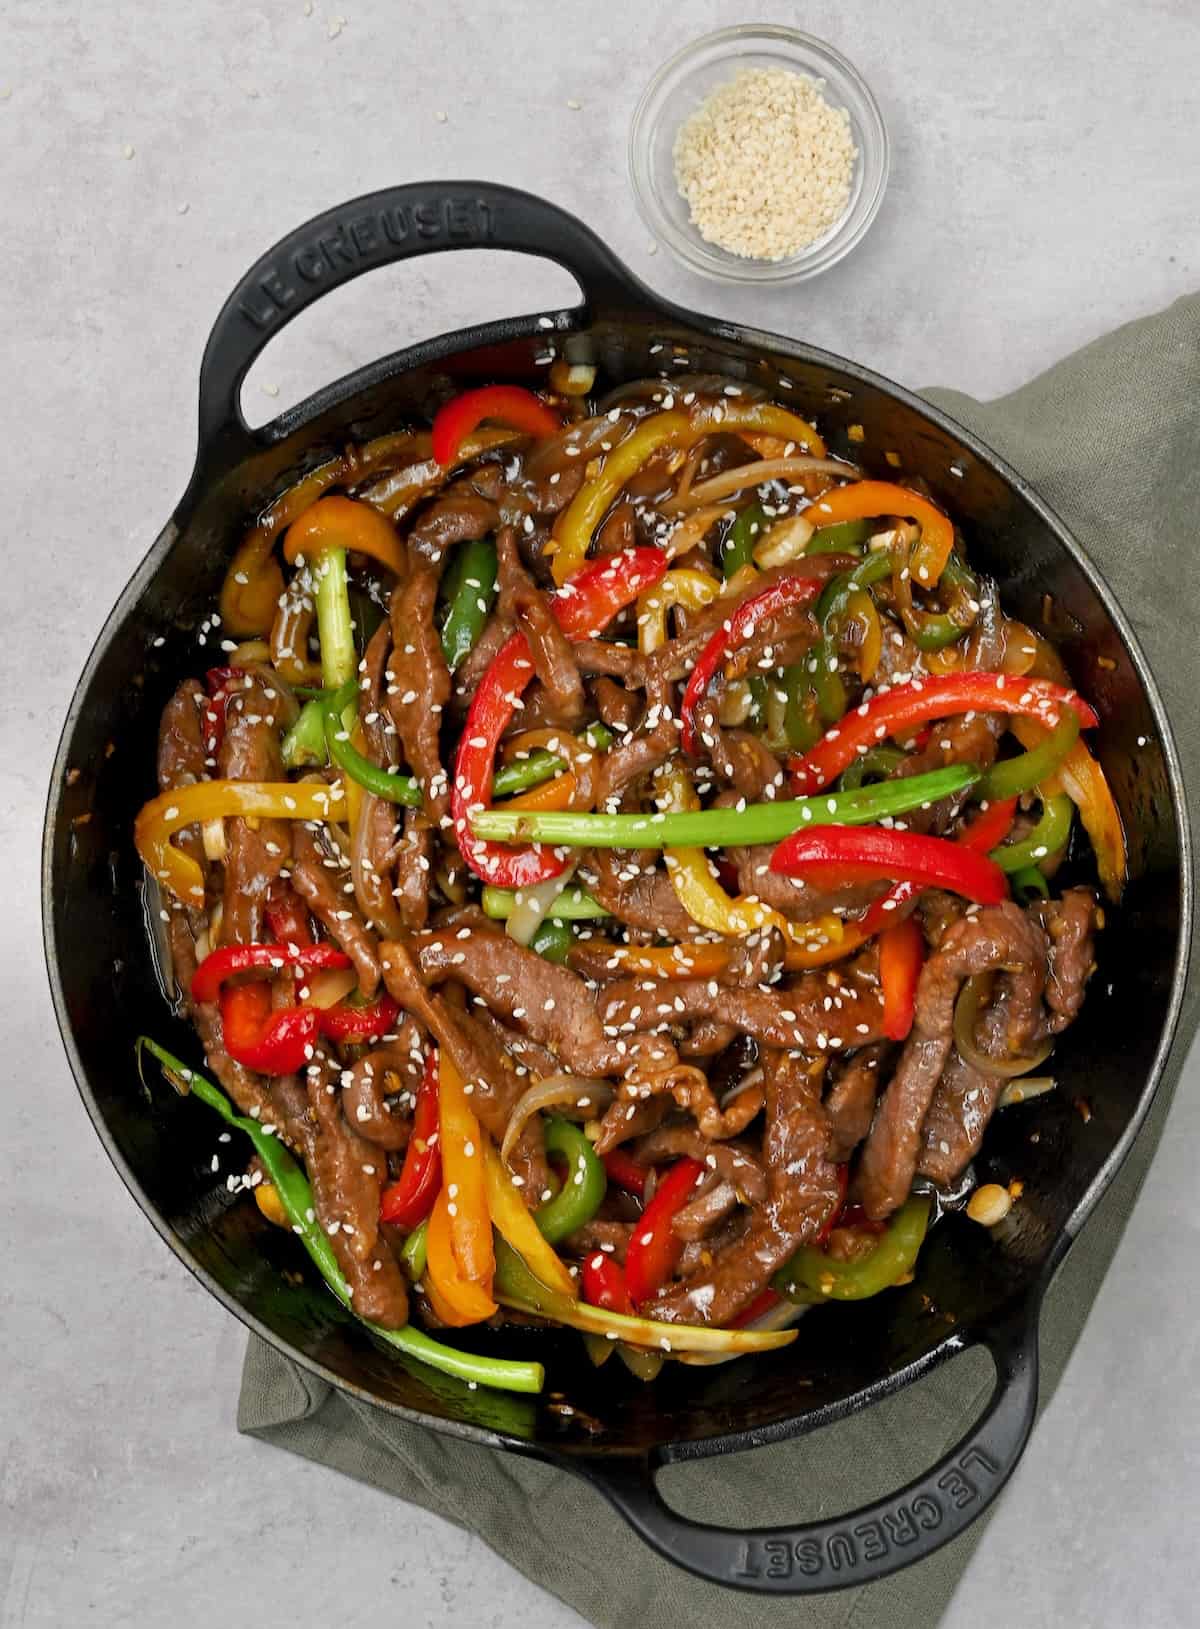 Beef stir fry sprinkled with sesame seeds in a wok